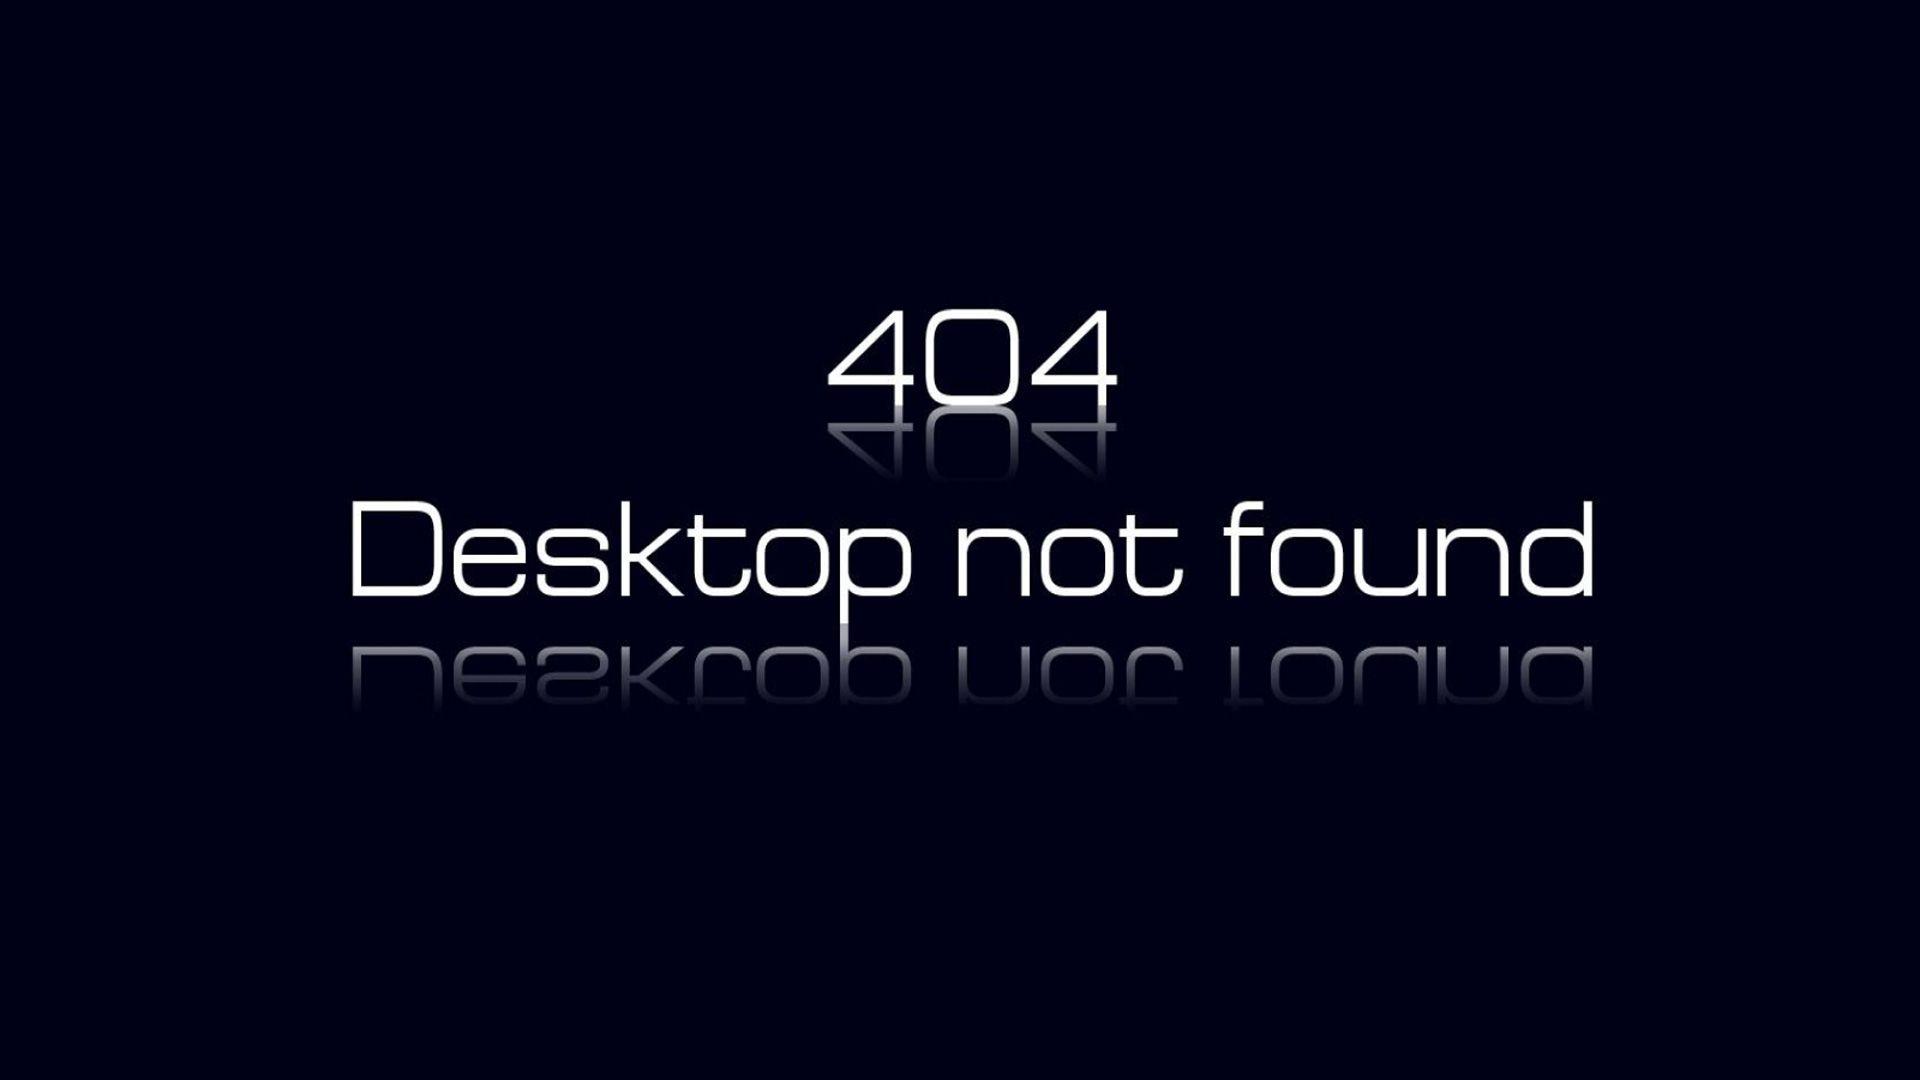 404 Not Found Desktop Wallpapers HD / Desktop and Mobile Backgrounds